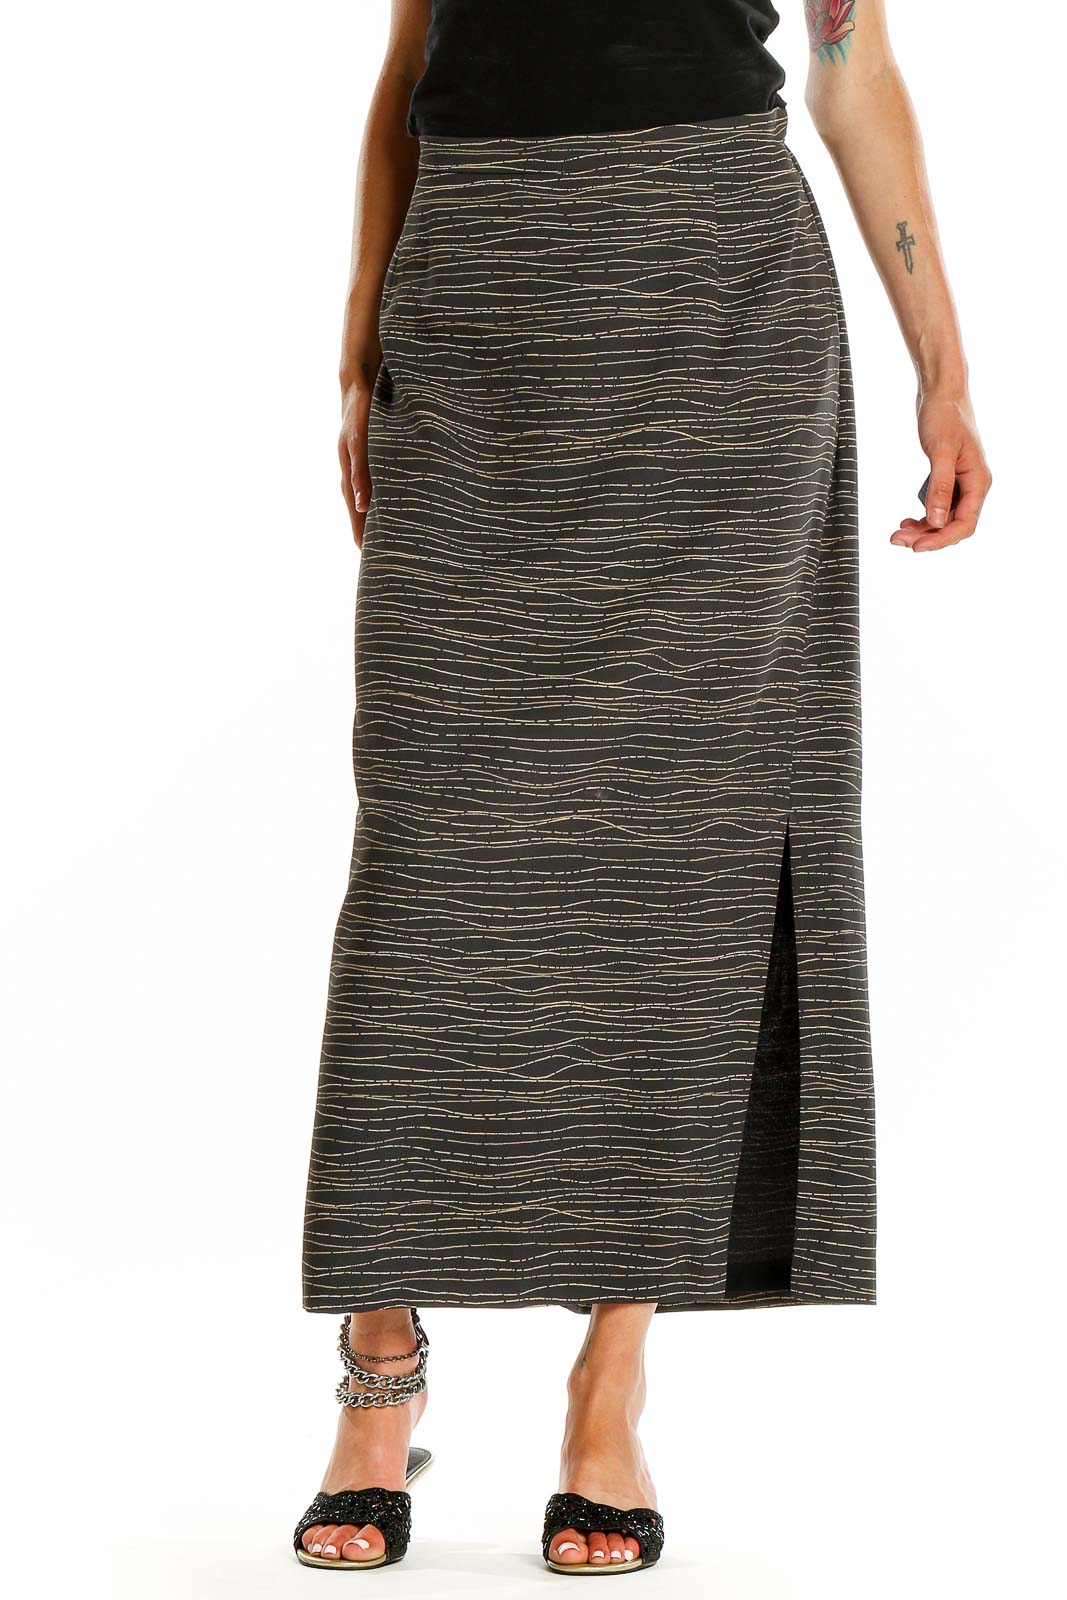 Black Wavy Stripe Printed Maxi Skirt Front